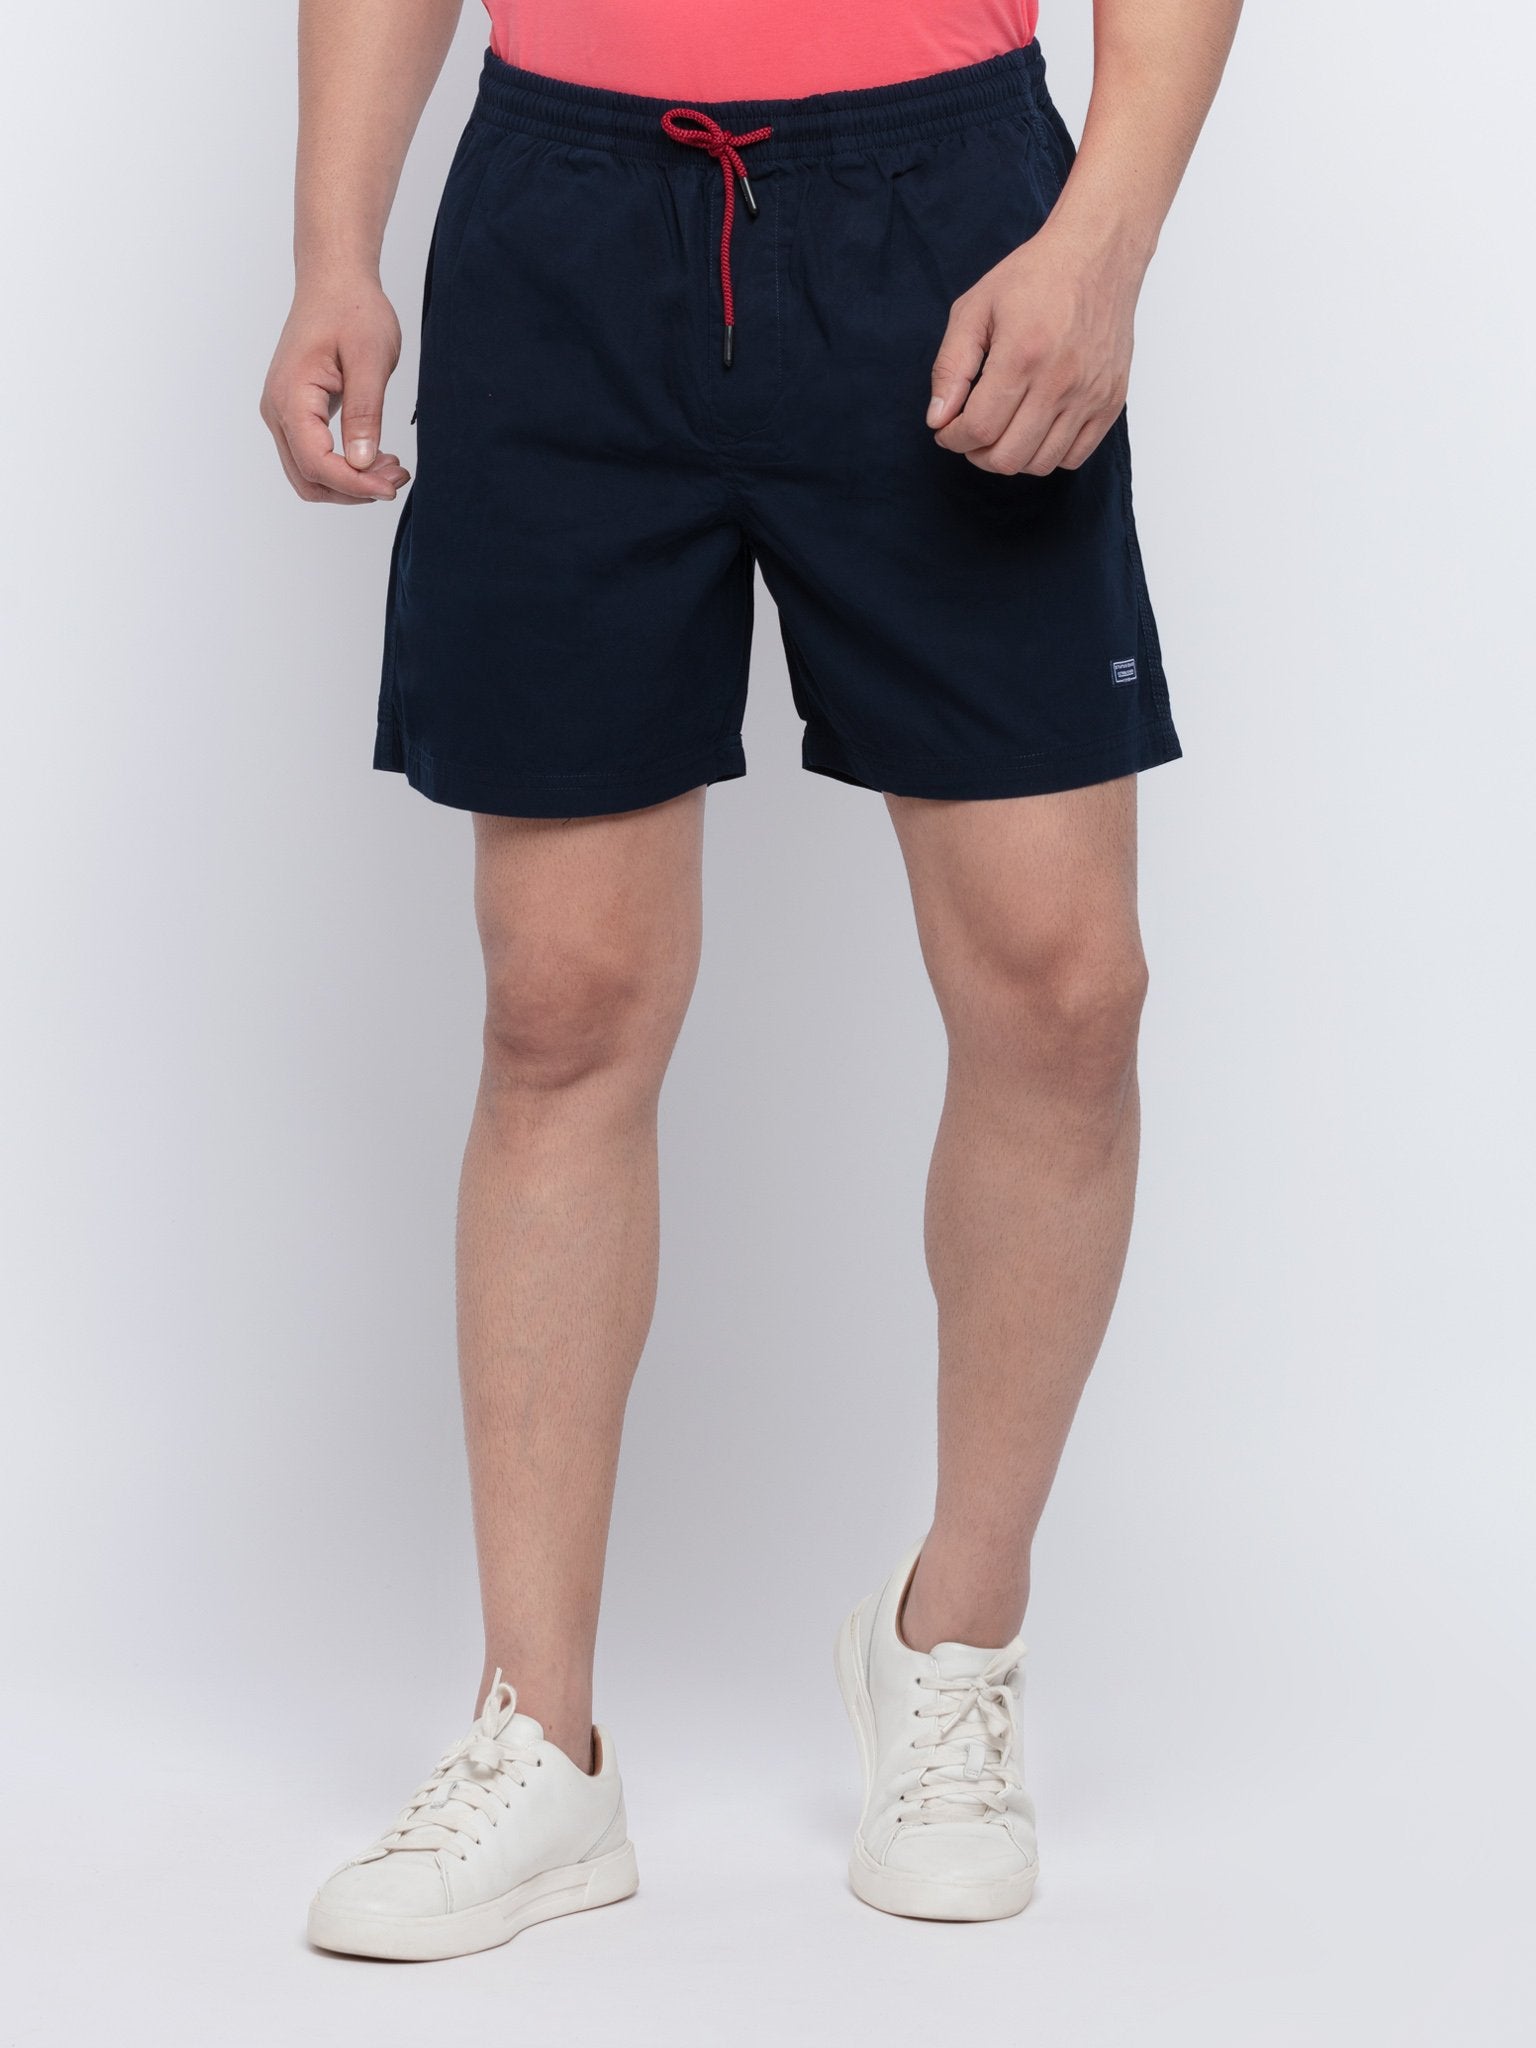 Status Quo |Solid Regular Fit Shorts - S, M, L, XL, XXL